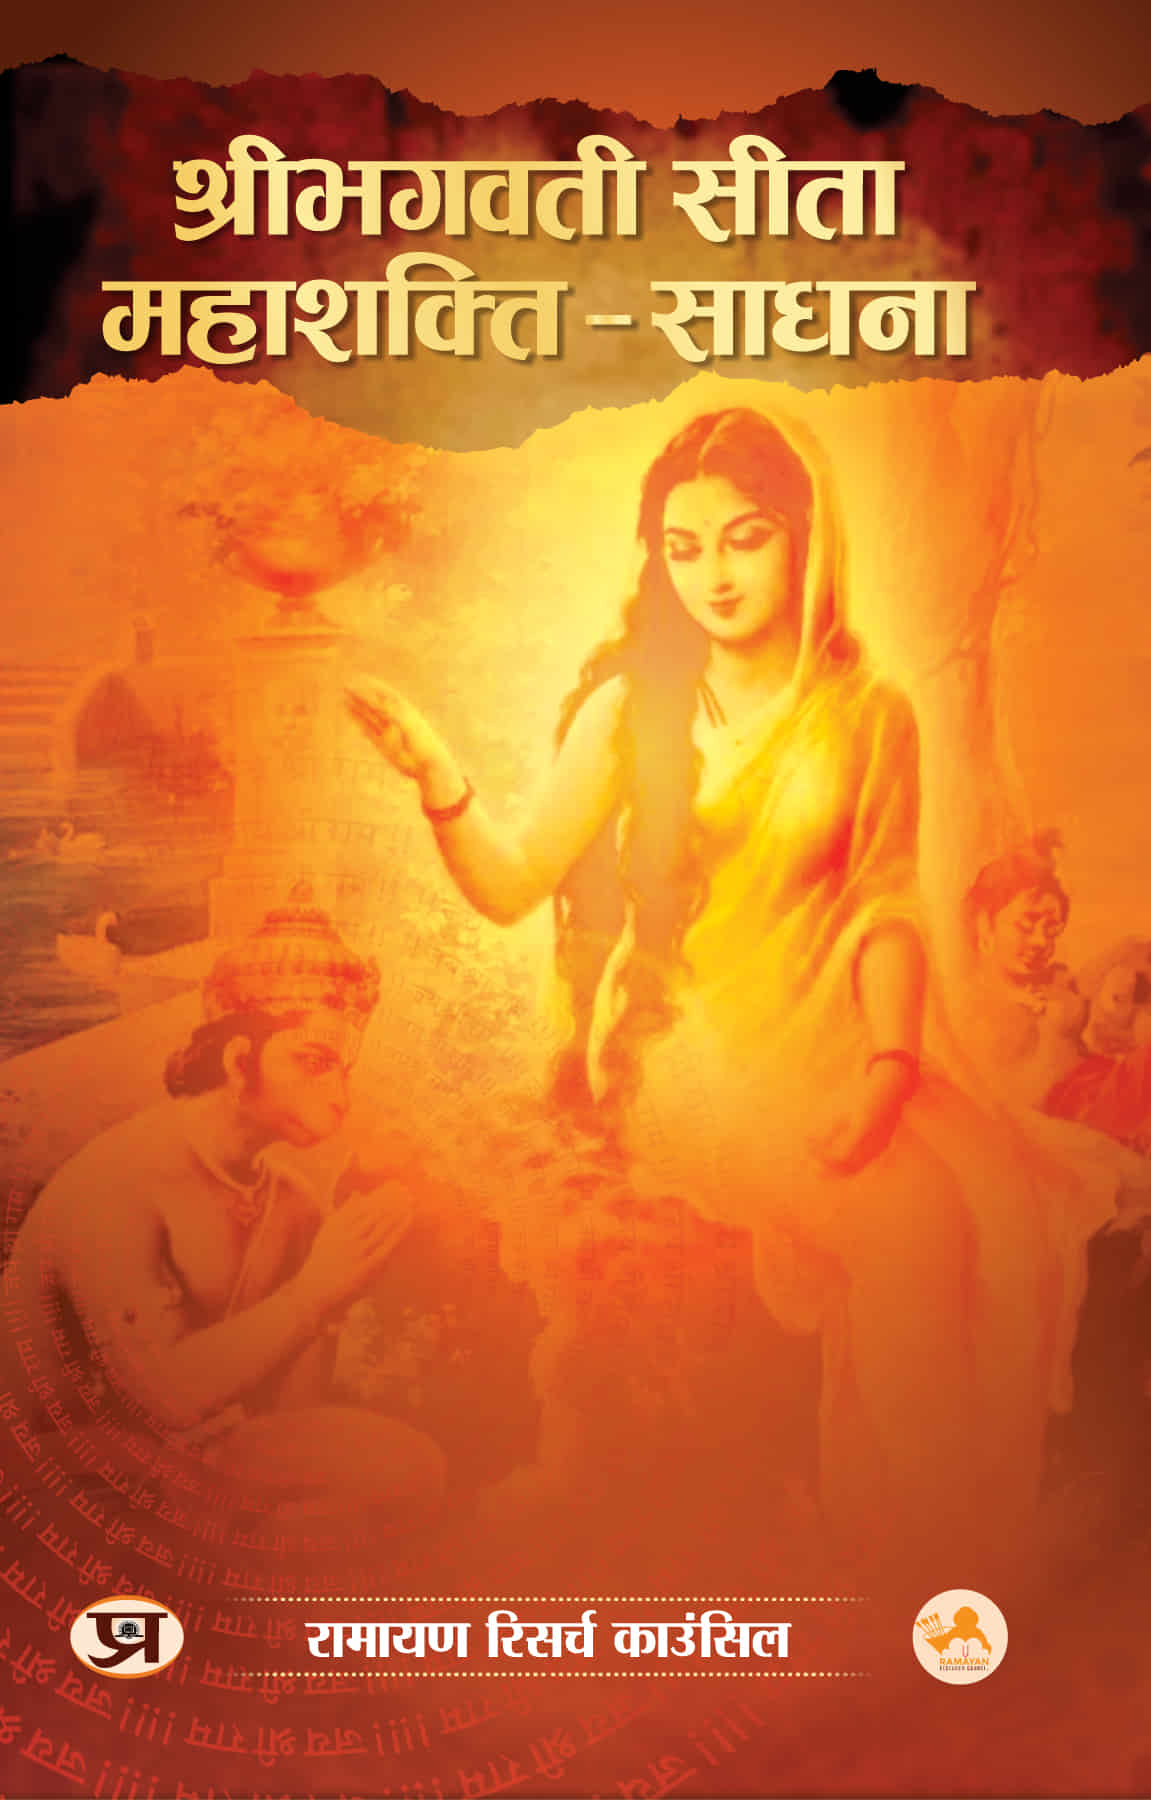 Shribhagwati Seeta Mahashakti-Sadhna